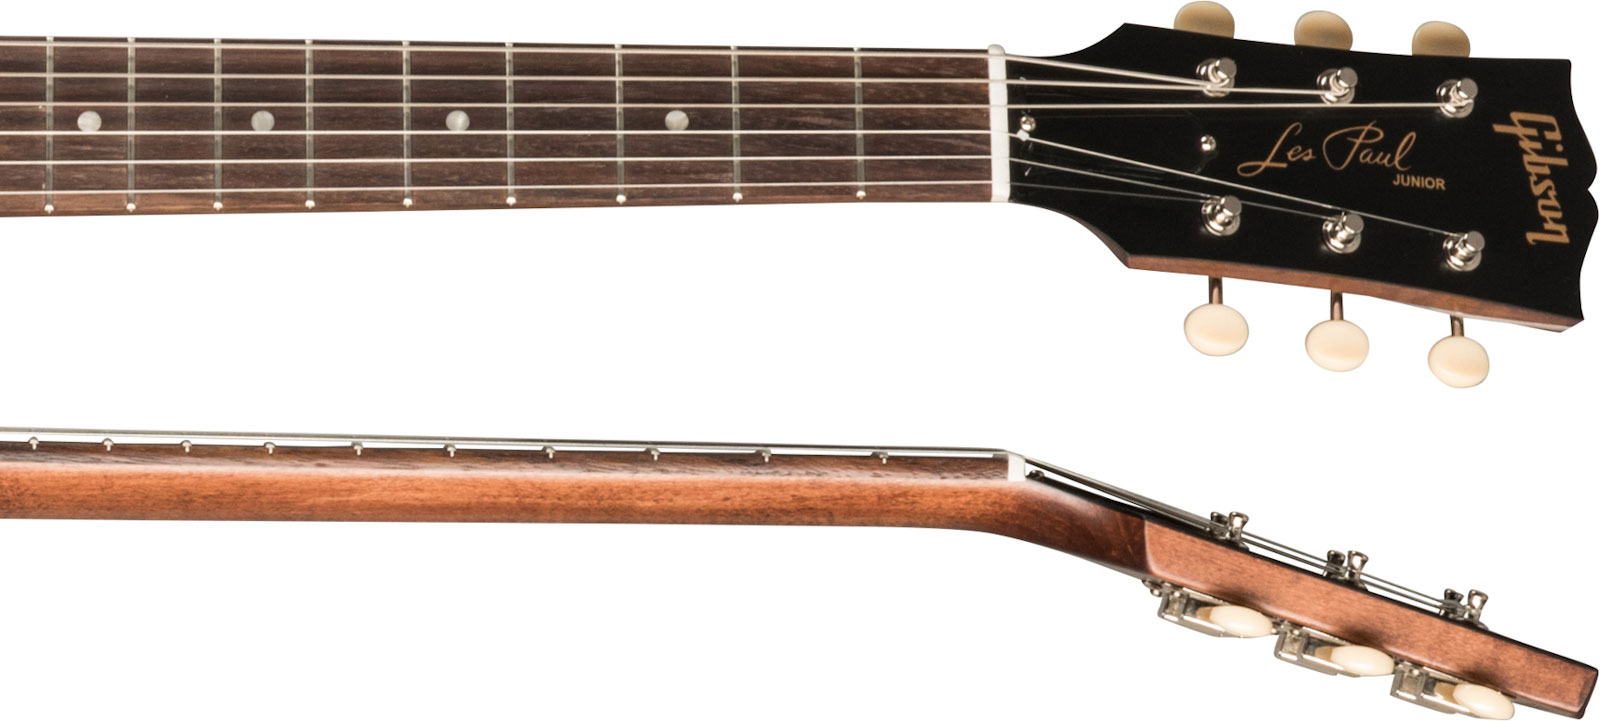 Gibson Les Paul Junior Tribute Dc Modern P90 - Worn Brown - Double cut electric guitar - Variation 3